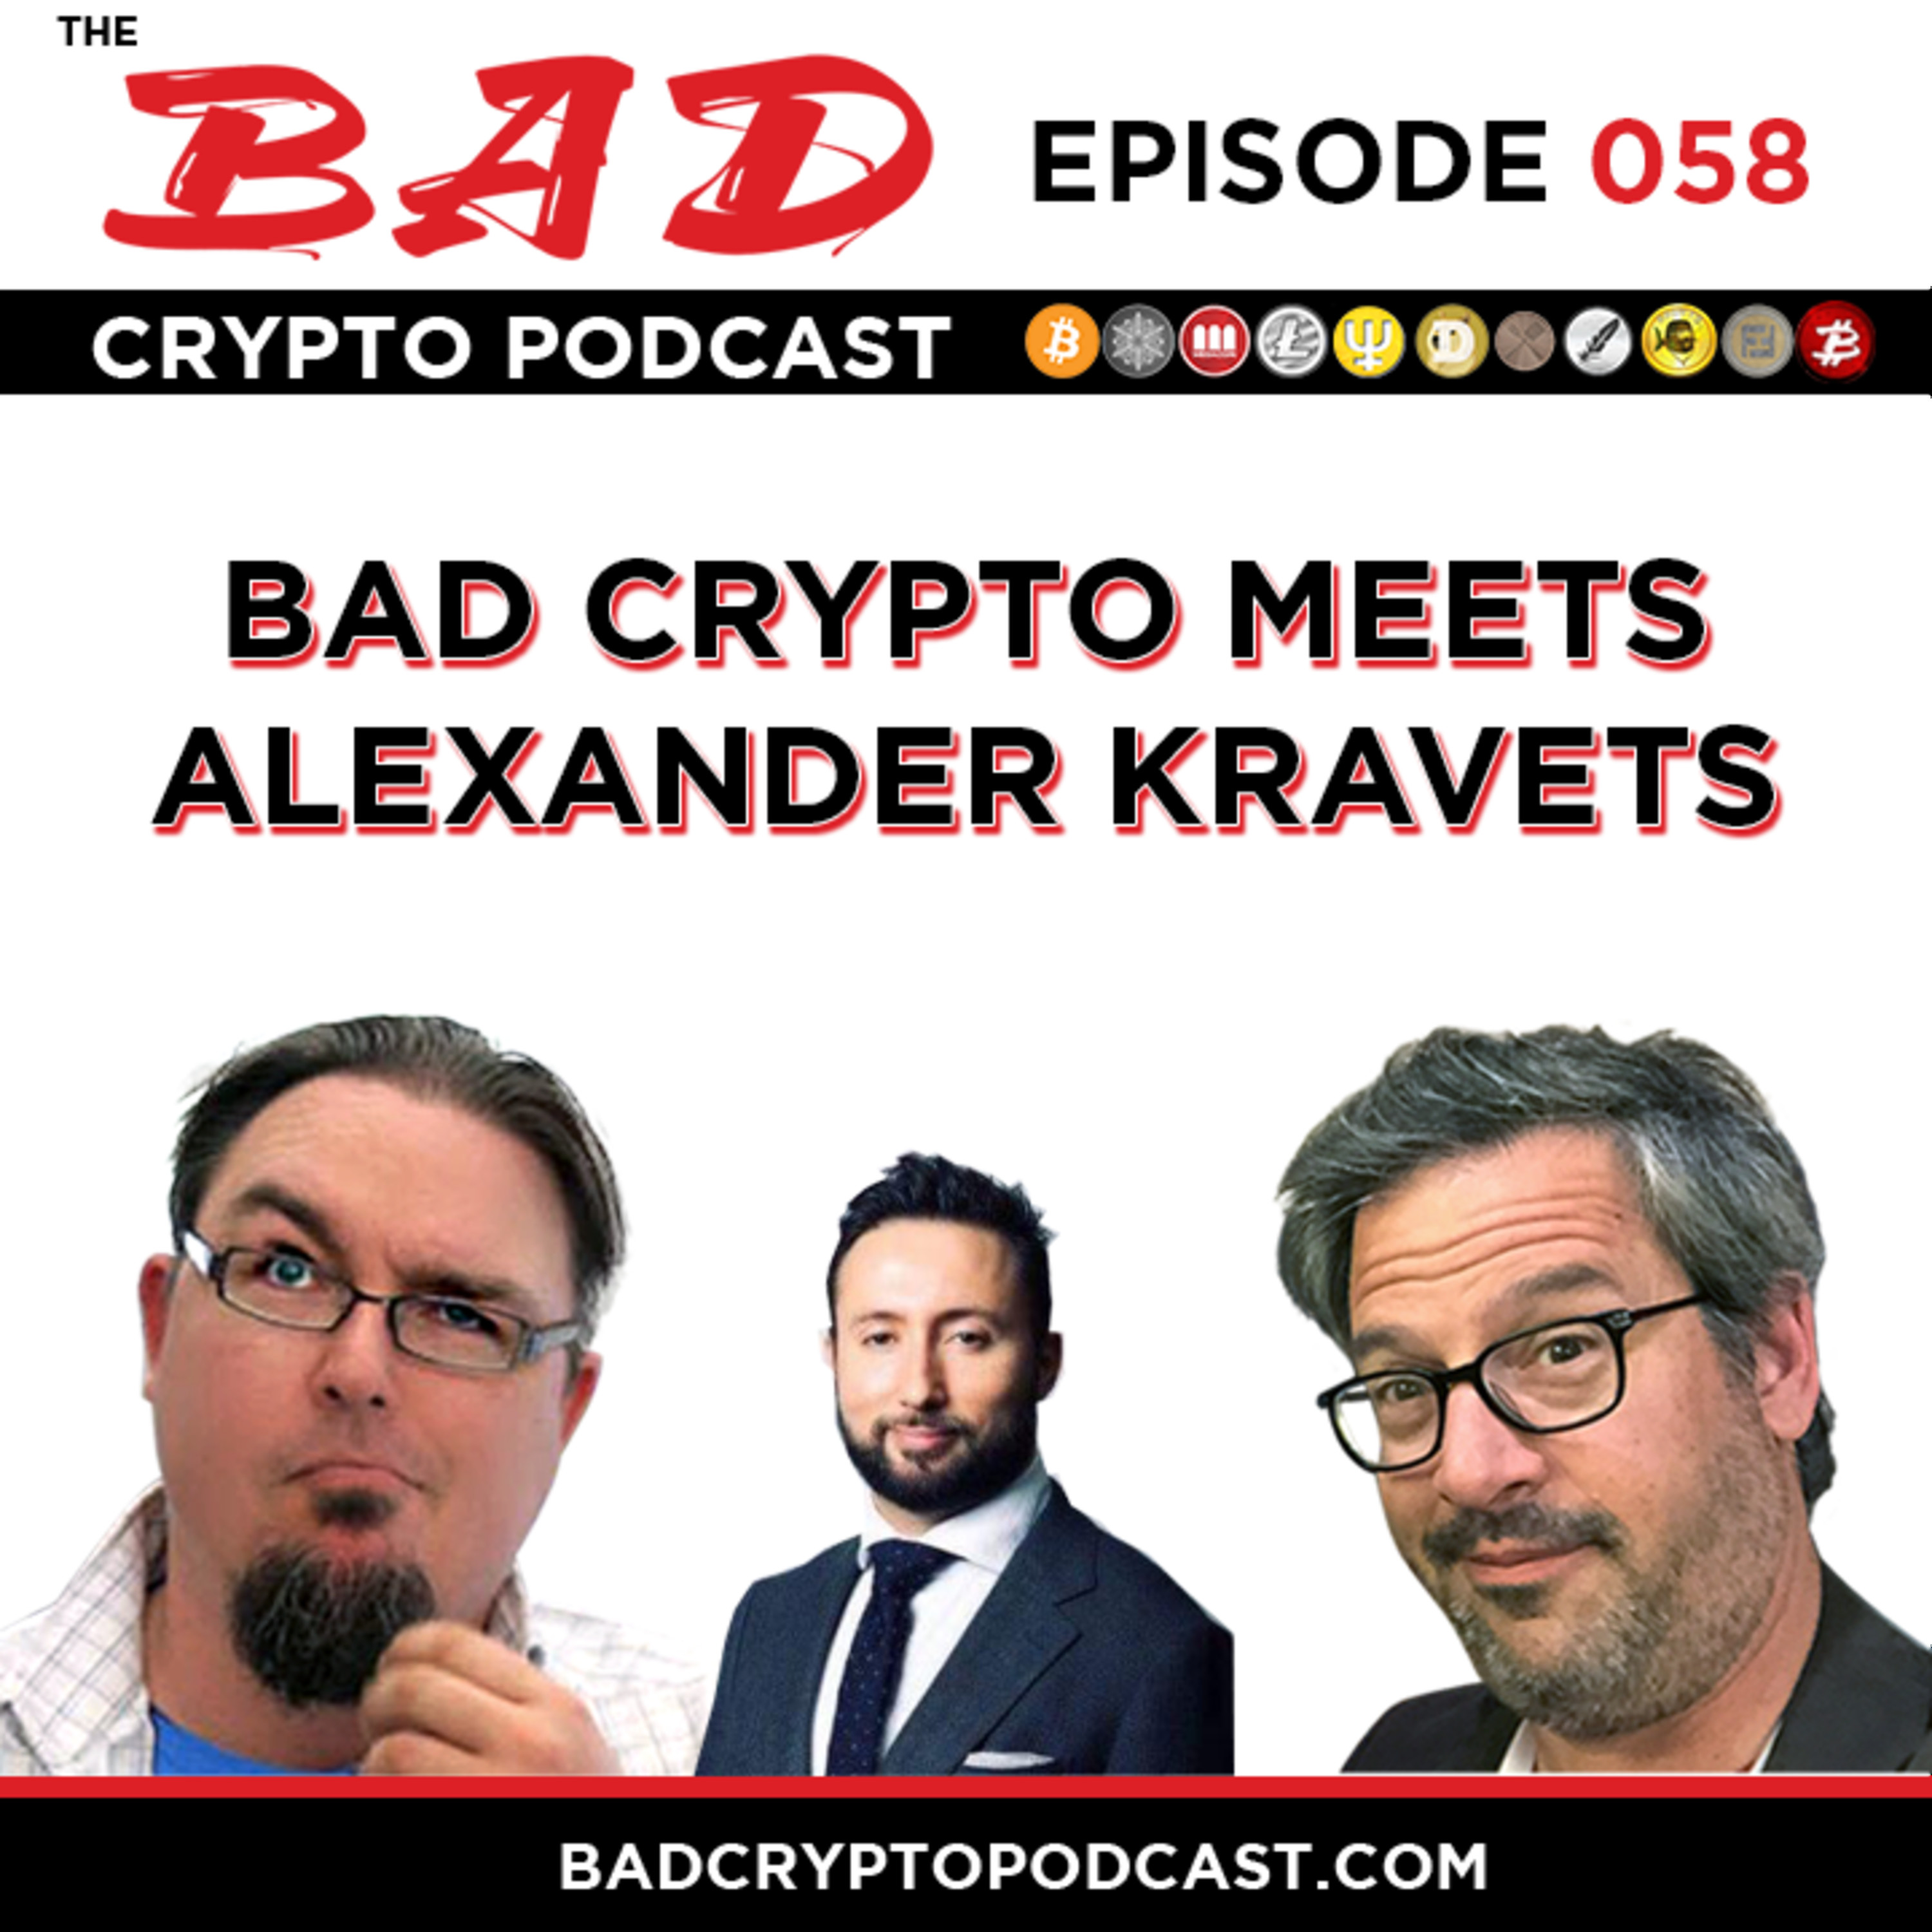 Bad Crypto Meets Alexander Kravets